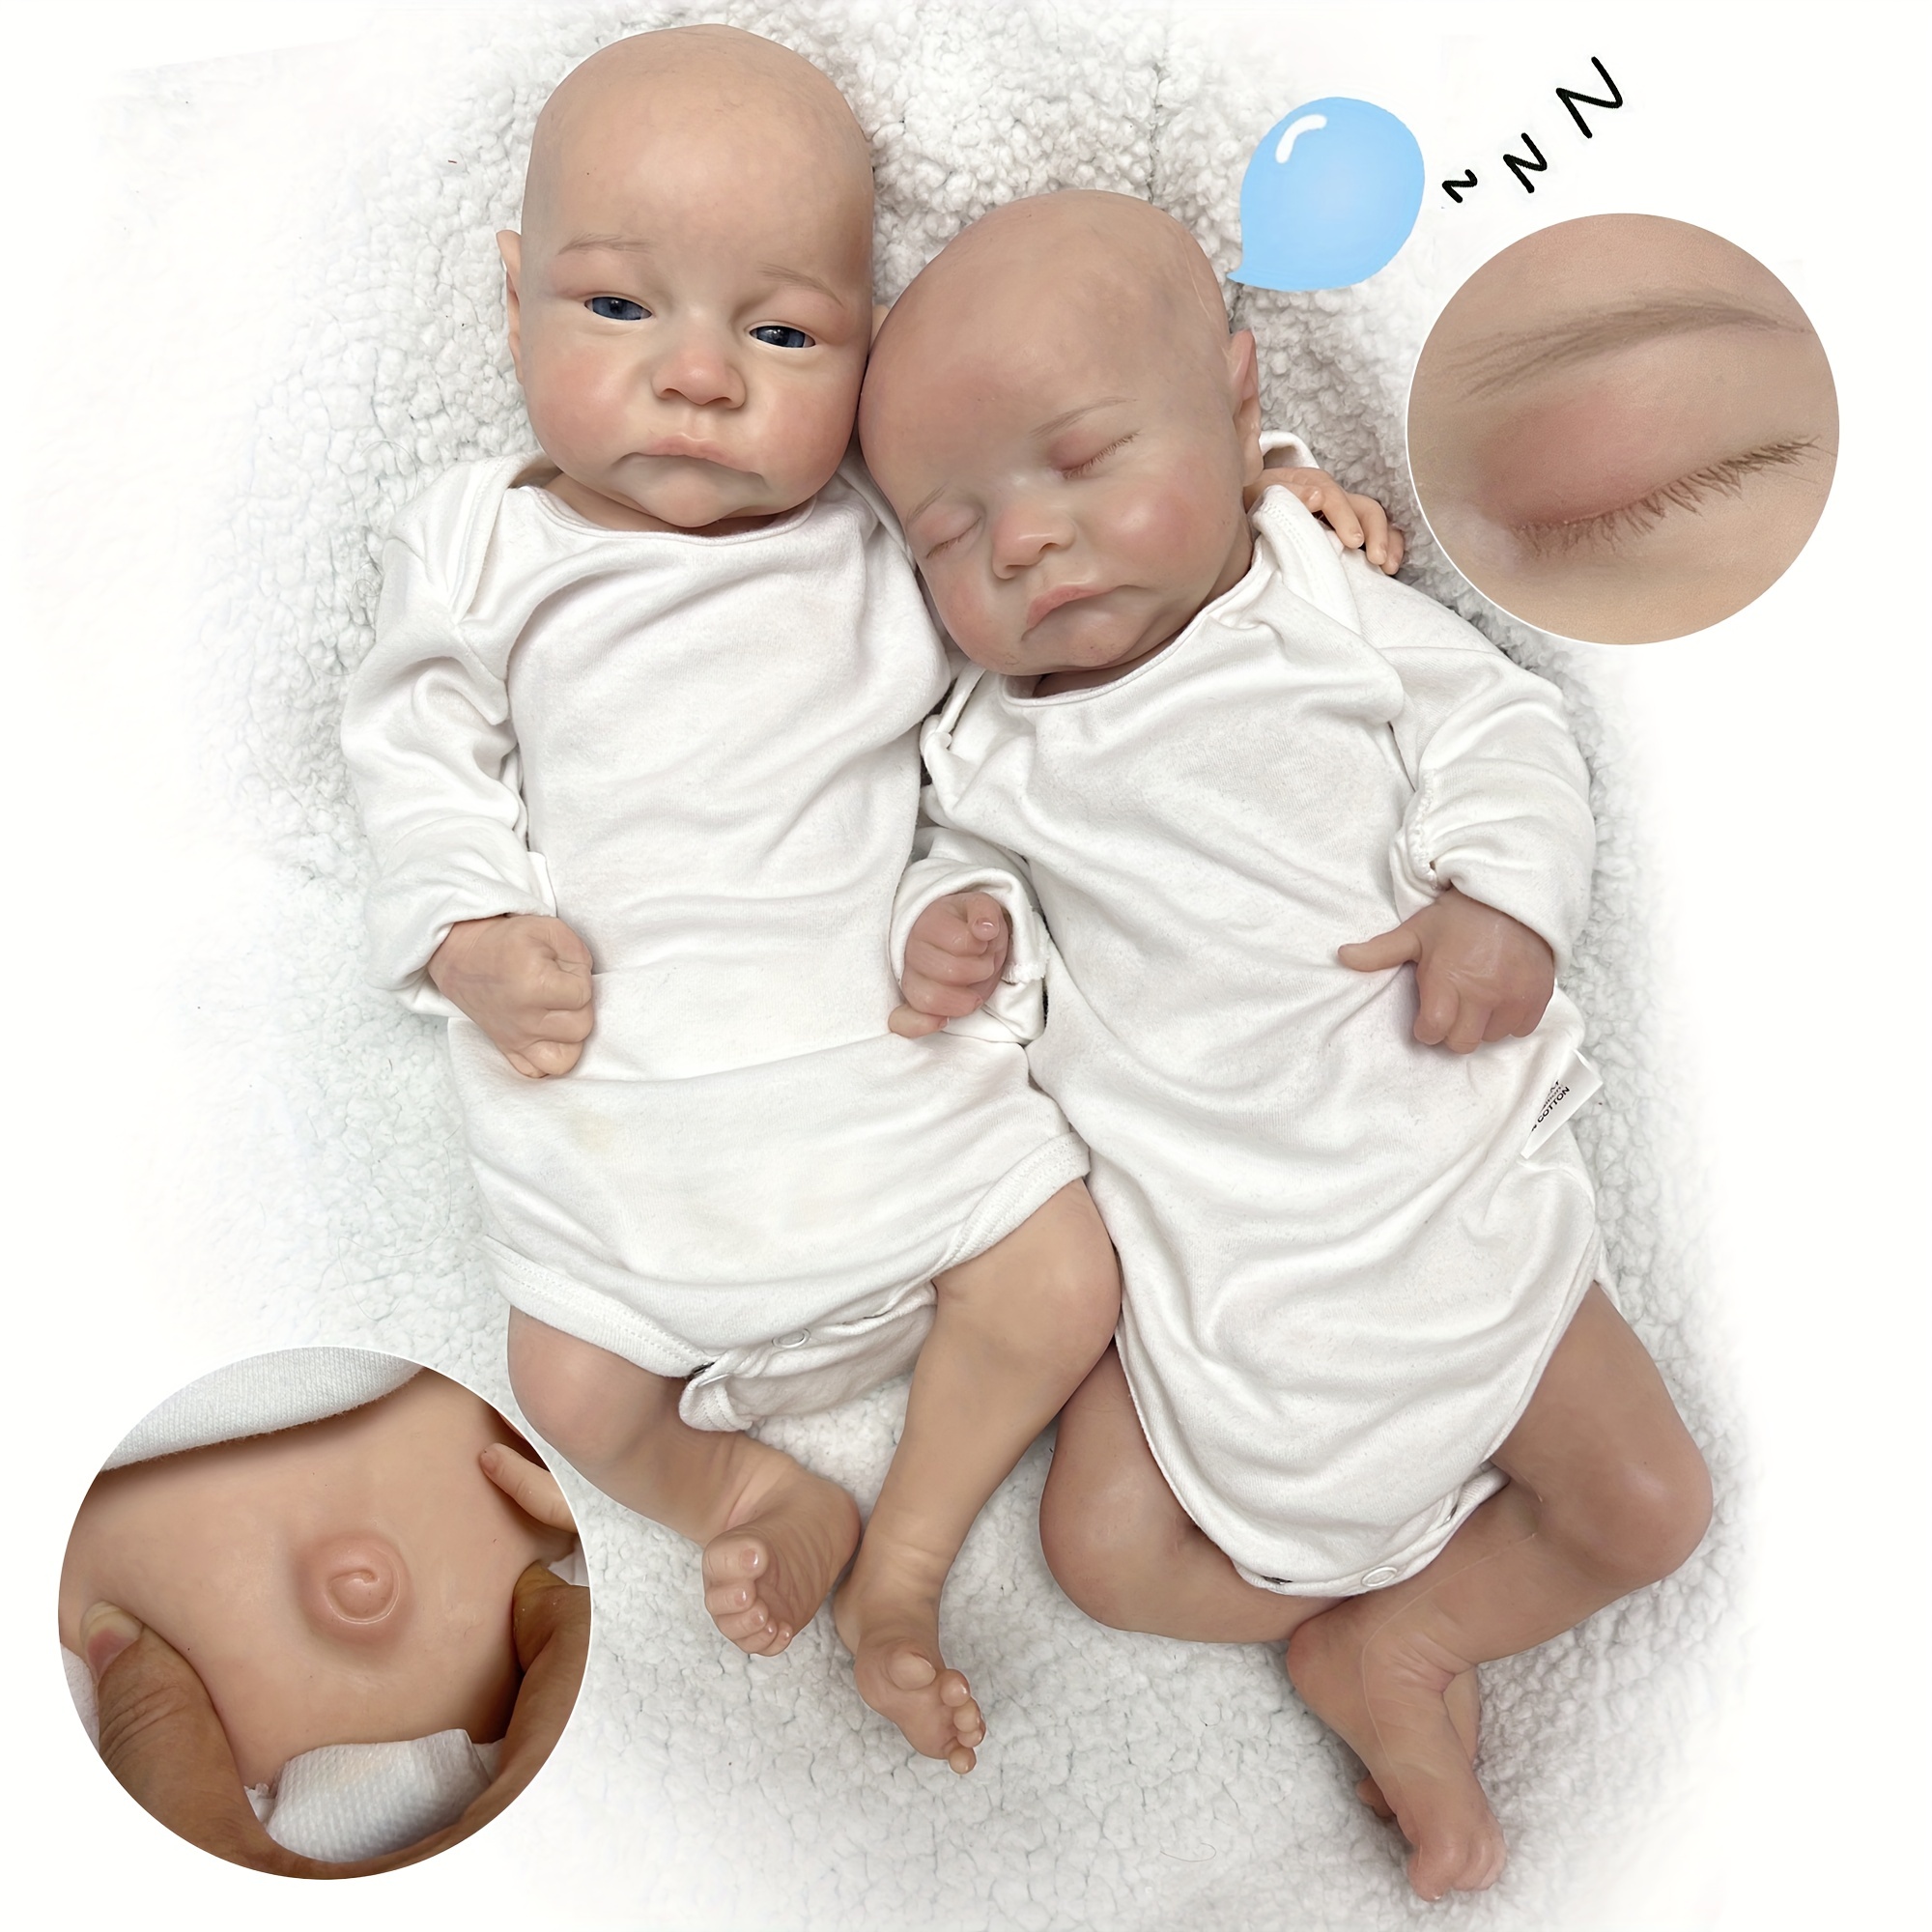 Anano Reborn Baby Dolls Silicone Full Body, 19 Inch Full Body